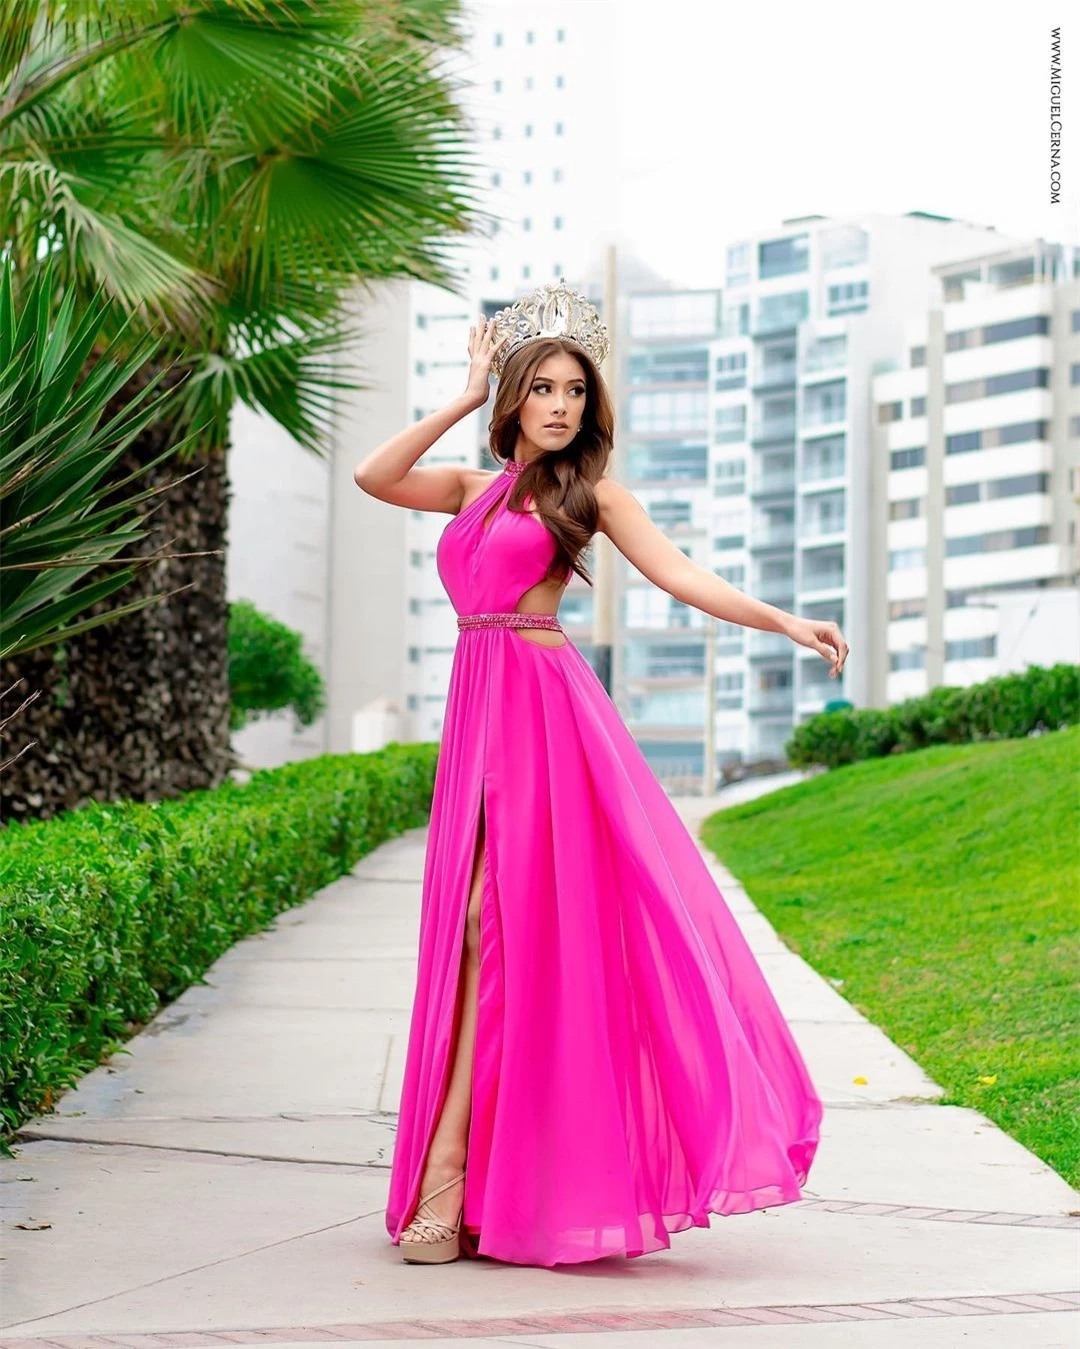 Vẻ nóng bỏng của tân Hoa hậu Hòa bình El Salvador ảnh 17